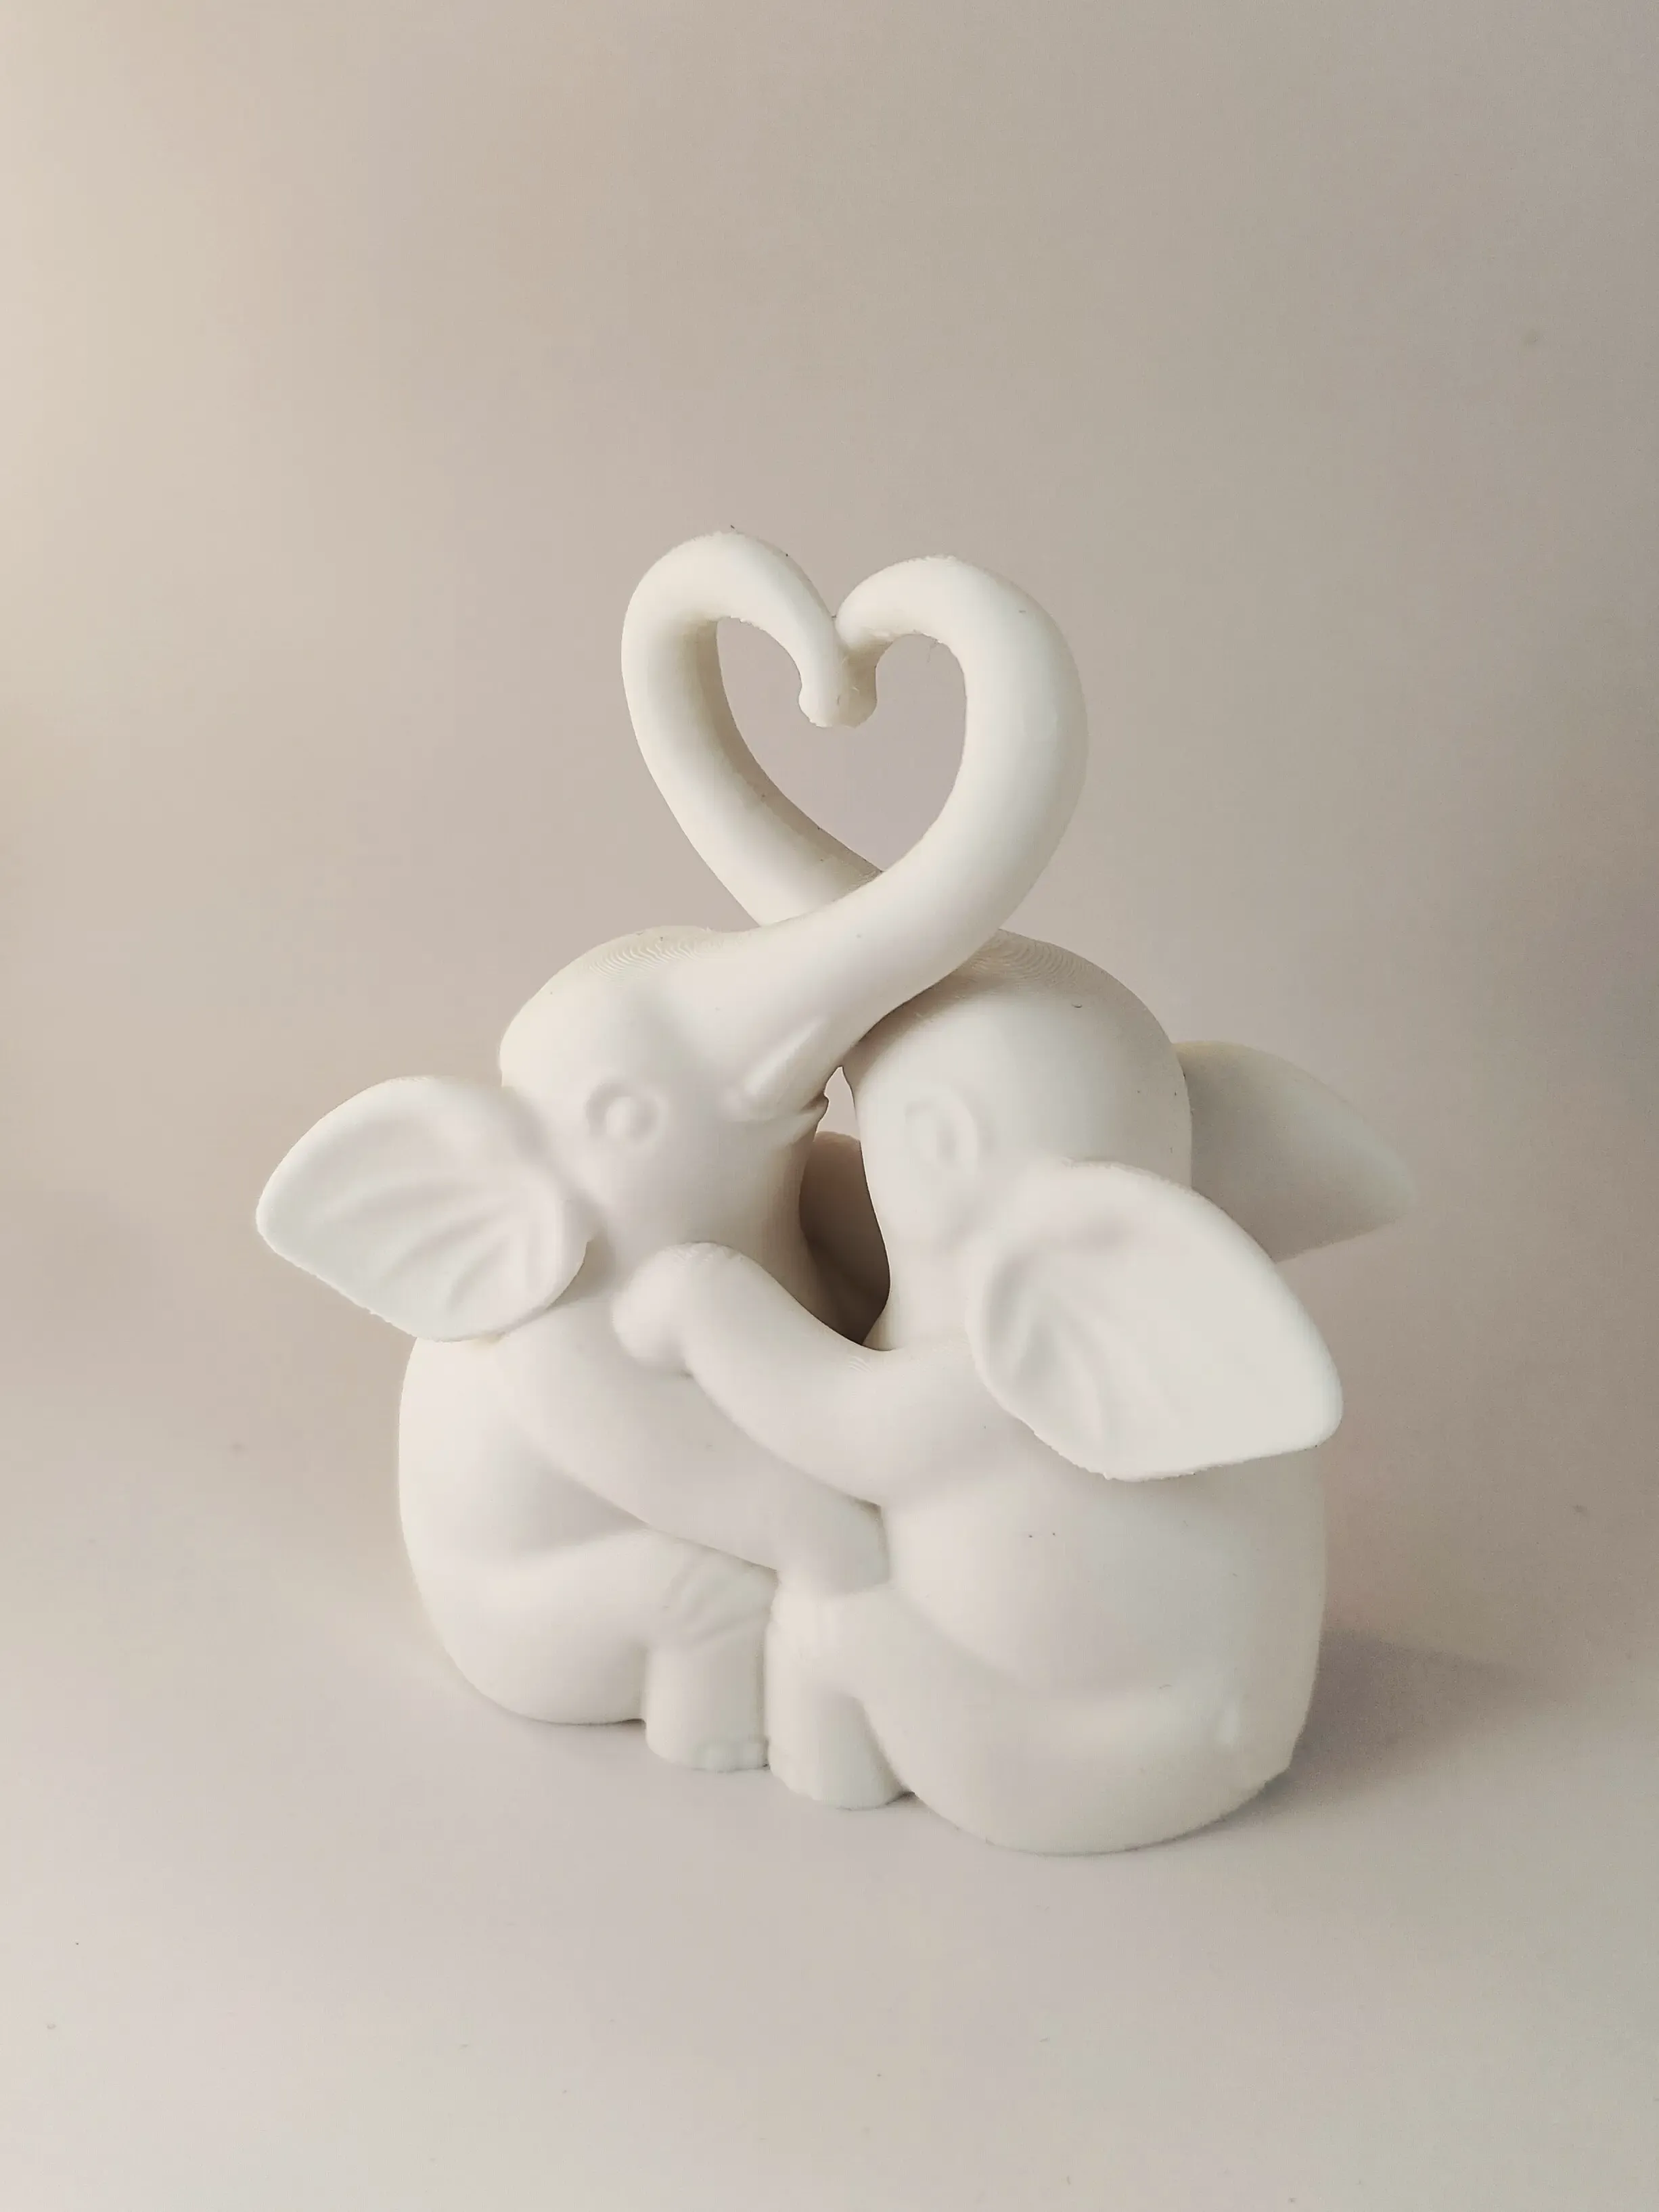 Valentine's elephants sculpture, cute elephants form a heart